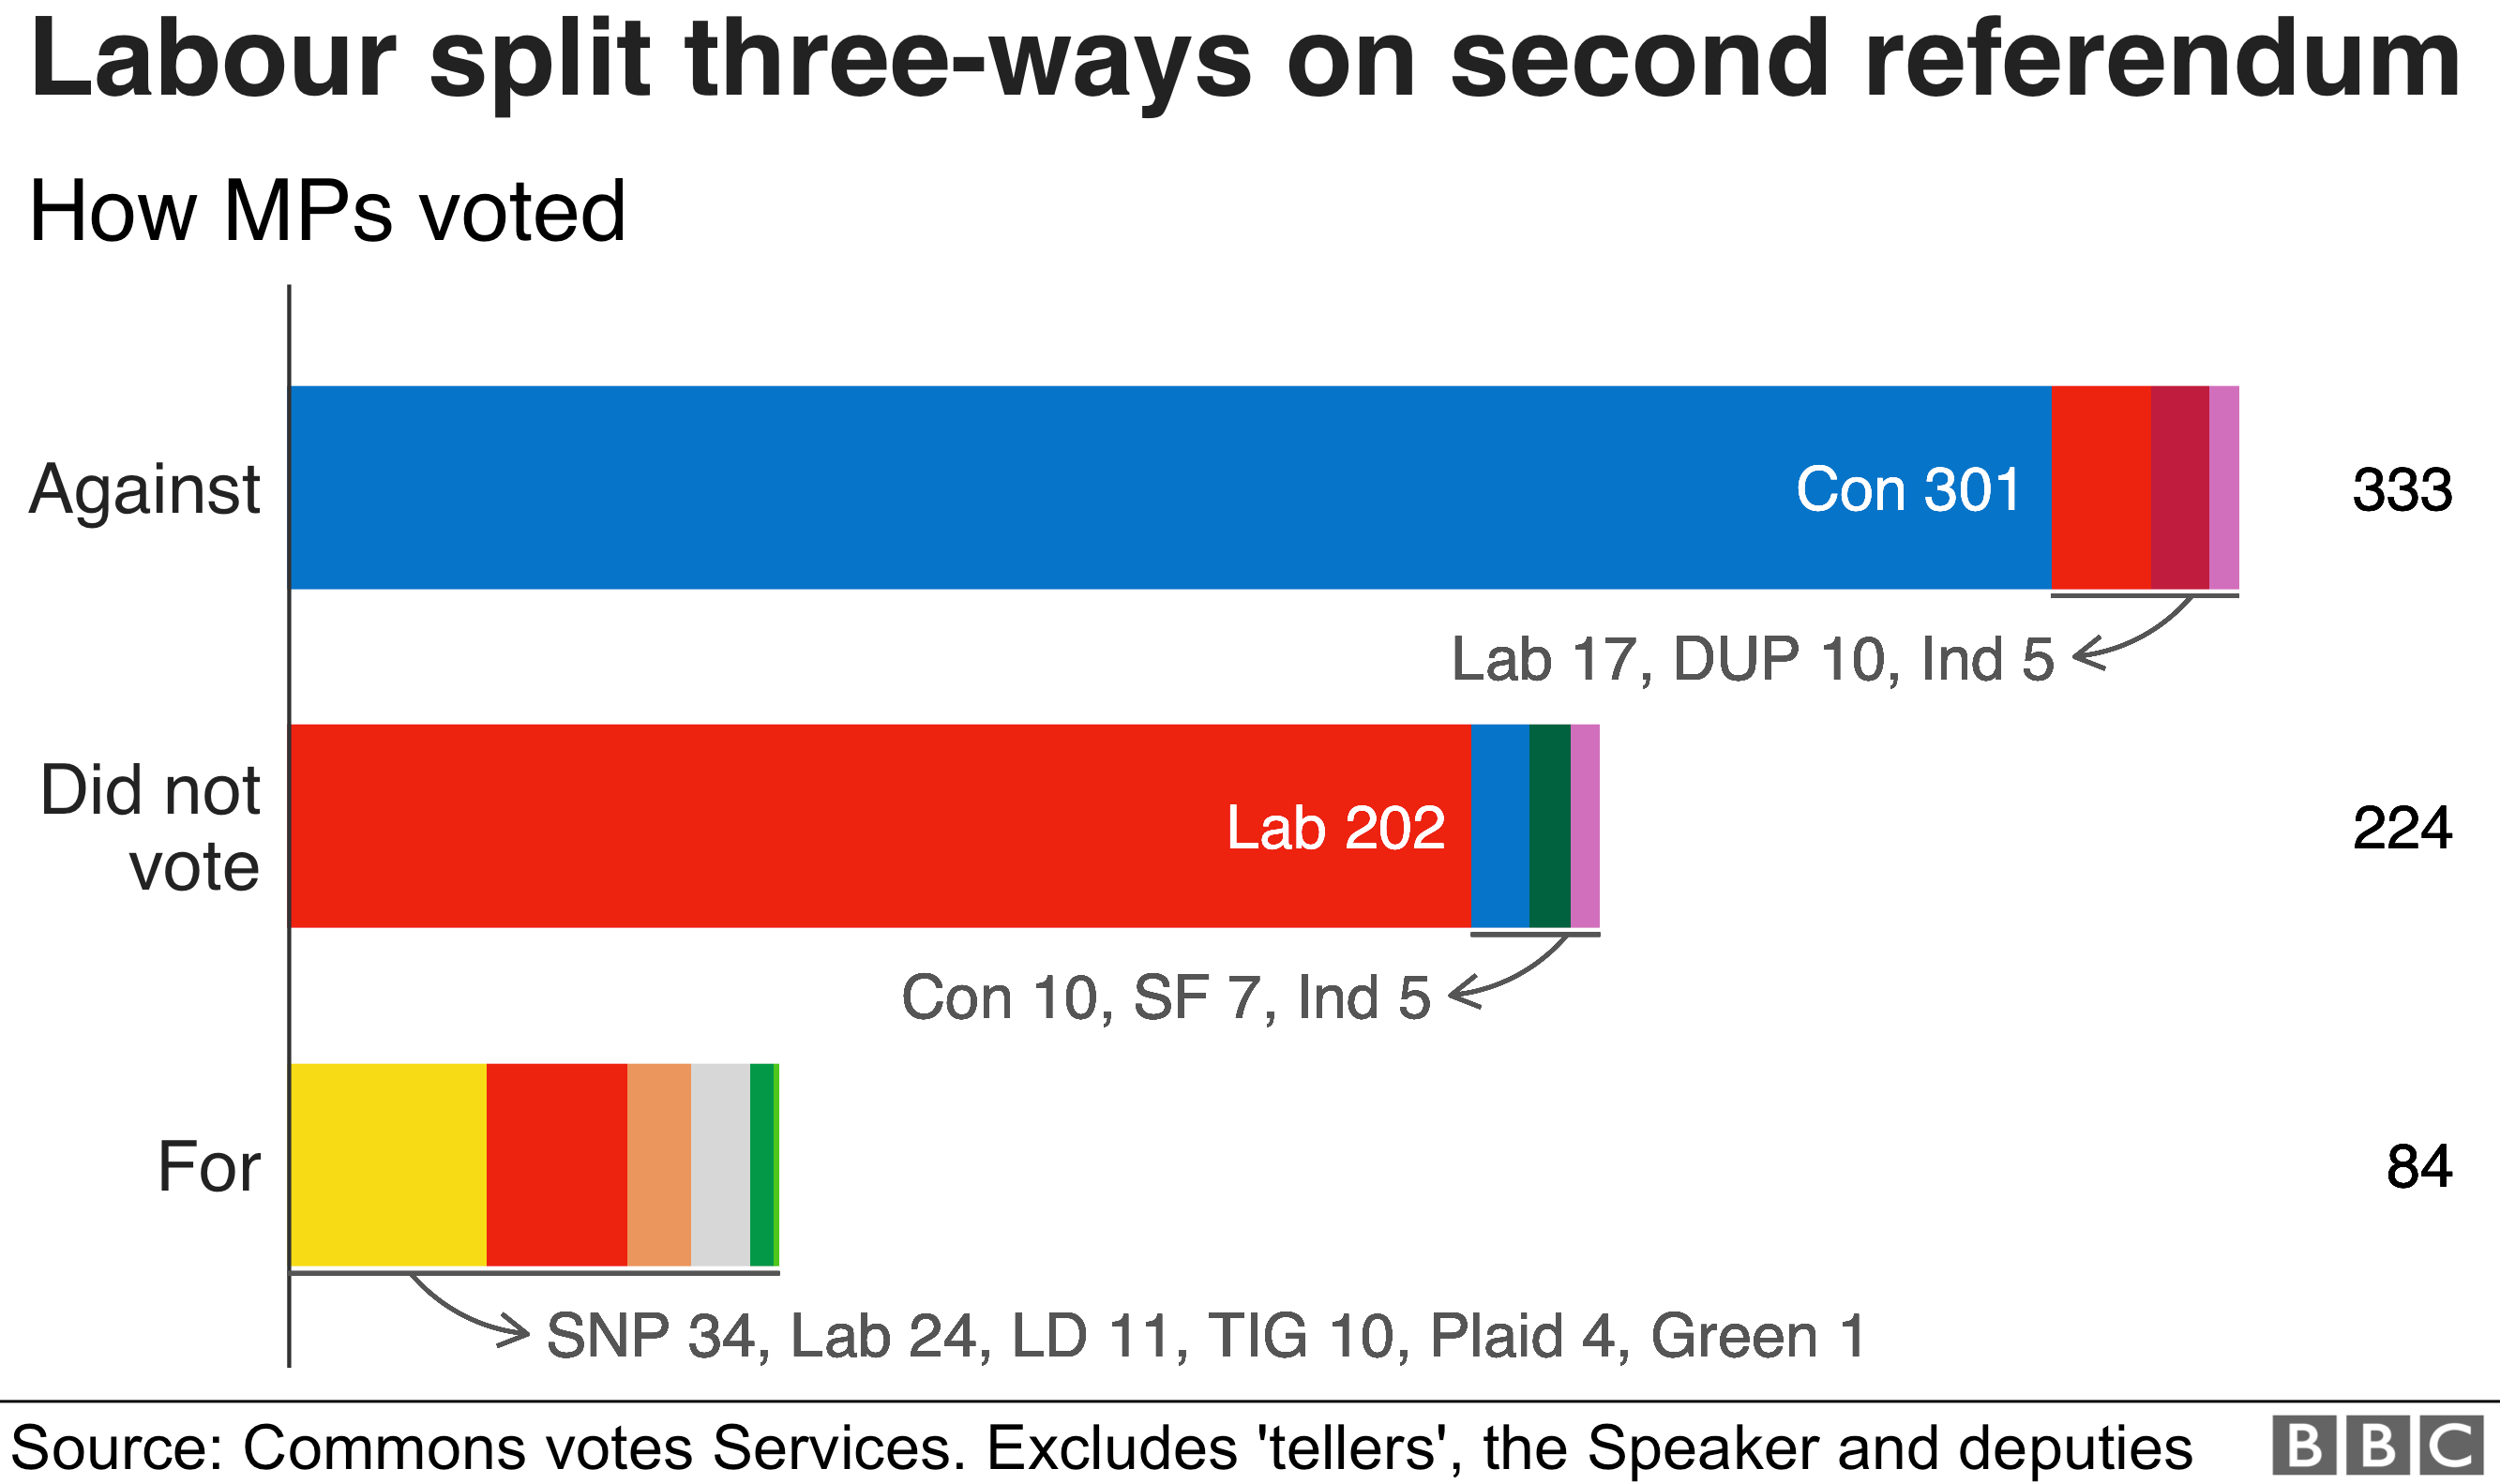 Labour split on referendum